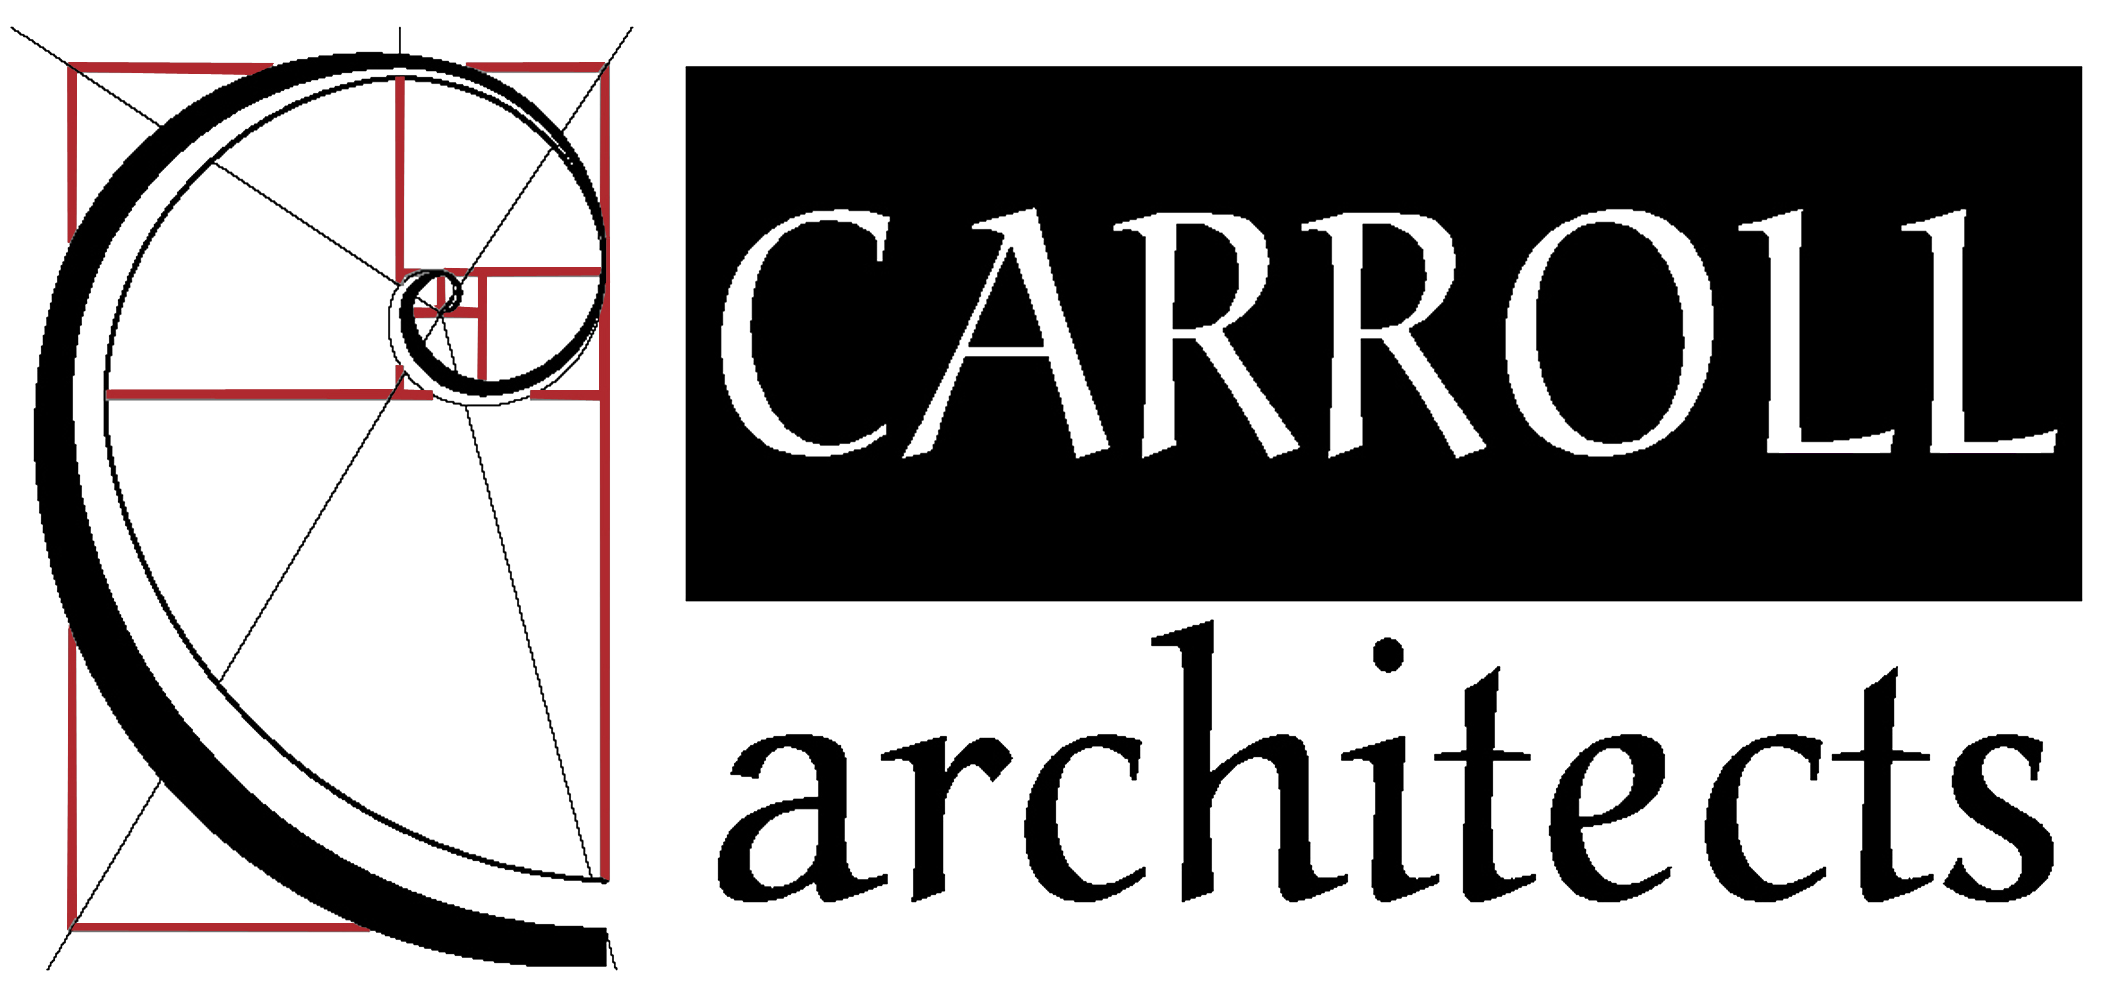 Carroll Architects